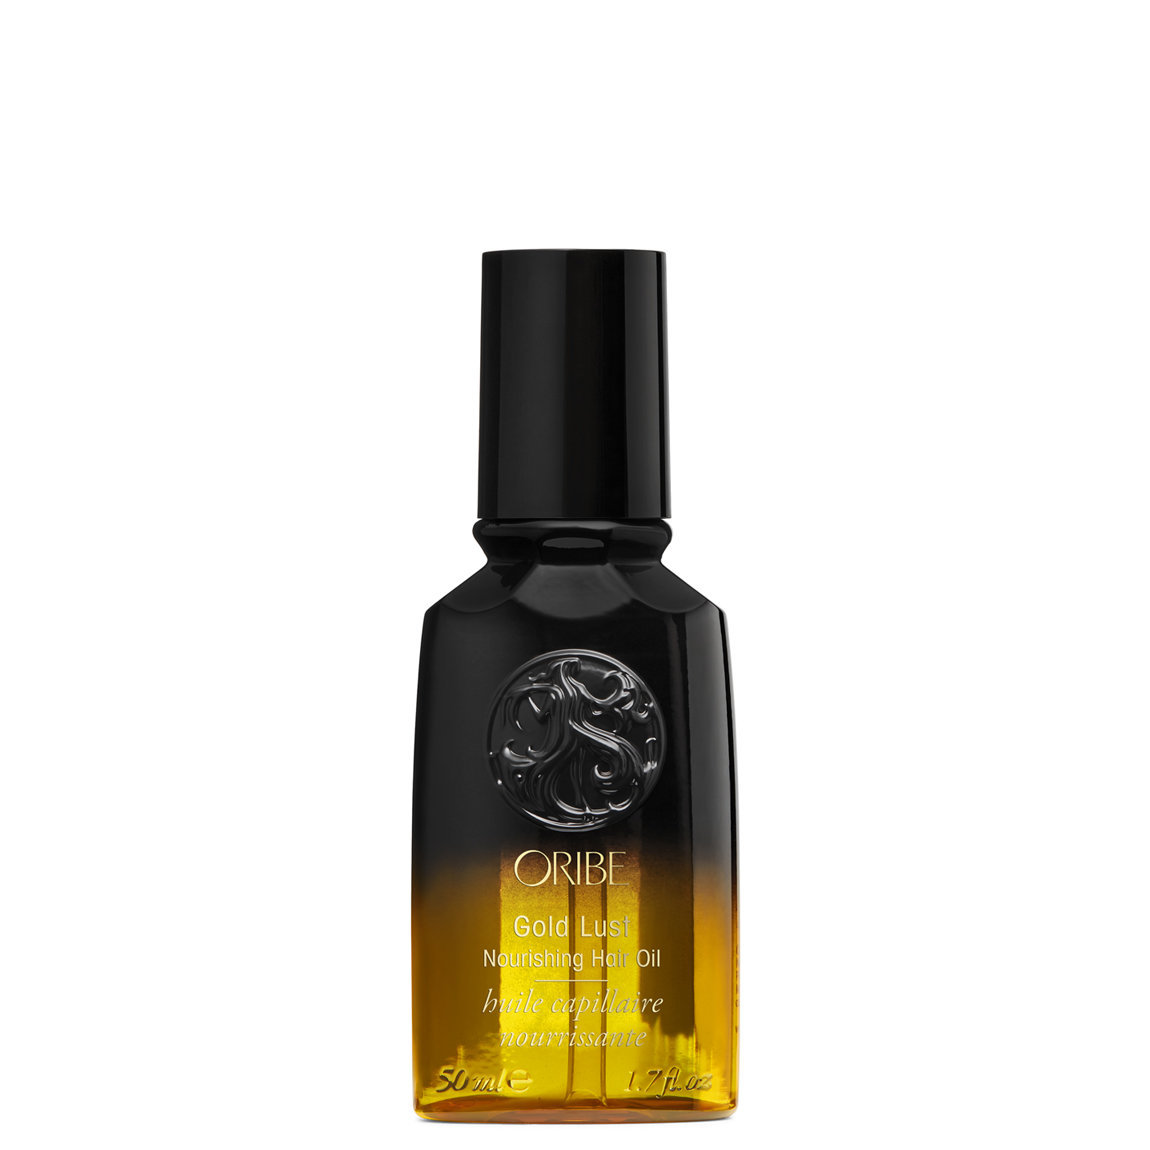 Oribe Gold Lust Nourishing Hair Oil 1.7 fl oz alternative view 1 - product swatch.